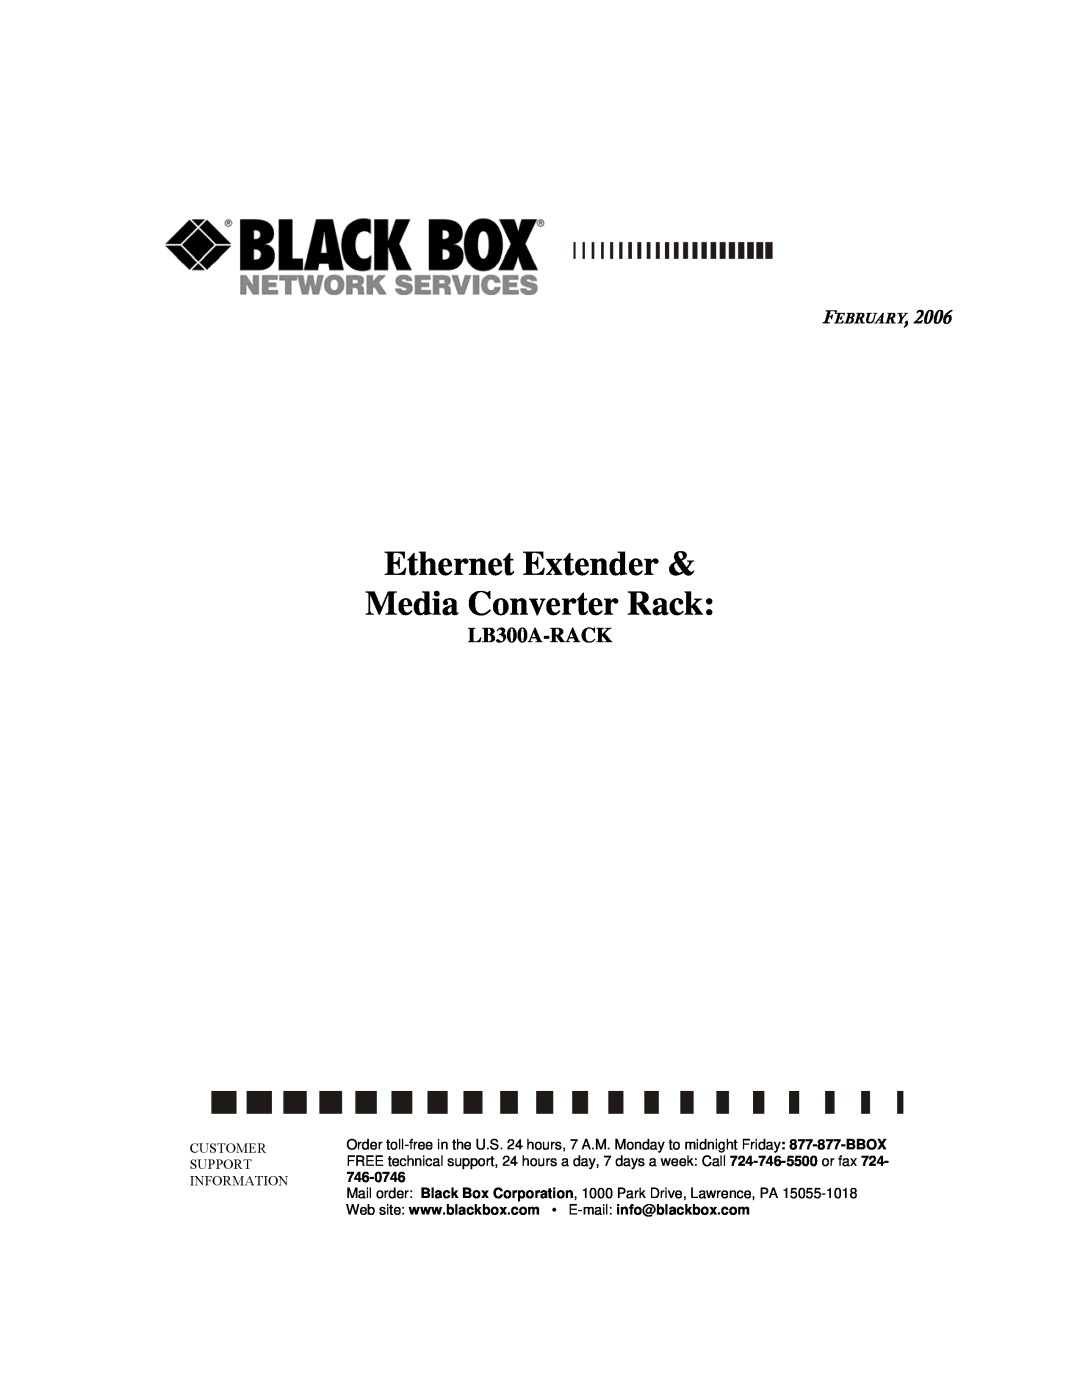 Black Box Ethernet Extender & Media Converter Rack manual Ethernet Extender Media Converter Rack, LB300A-RACK, February 